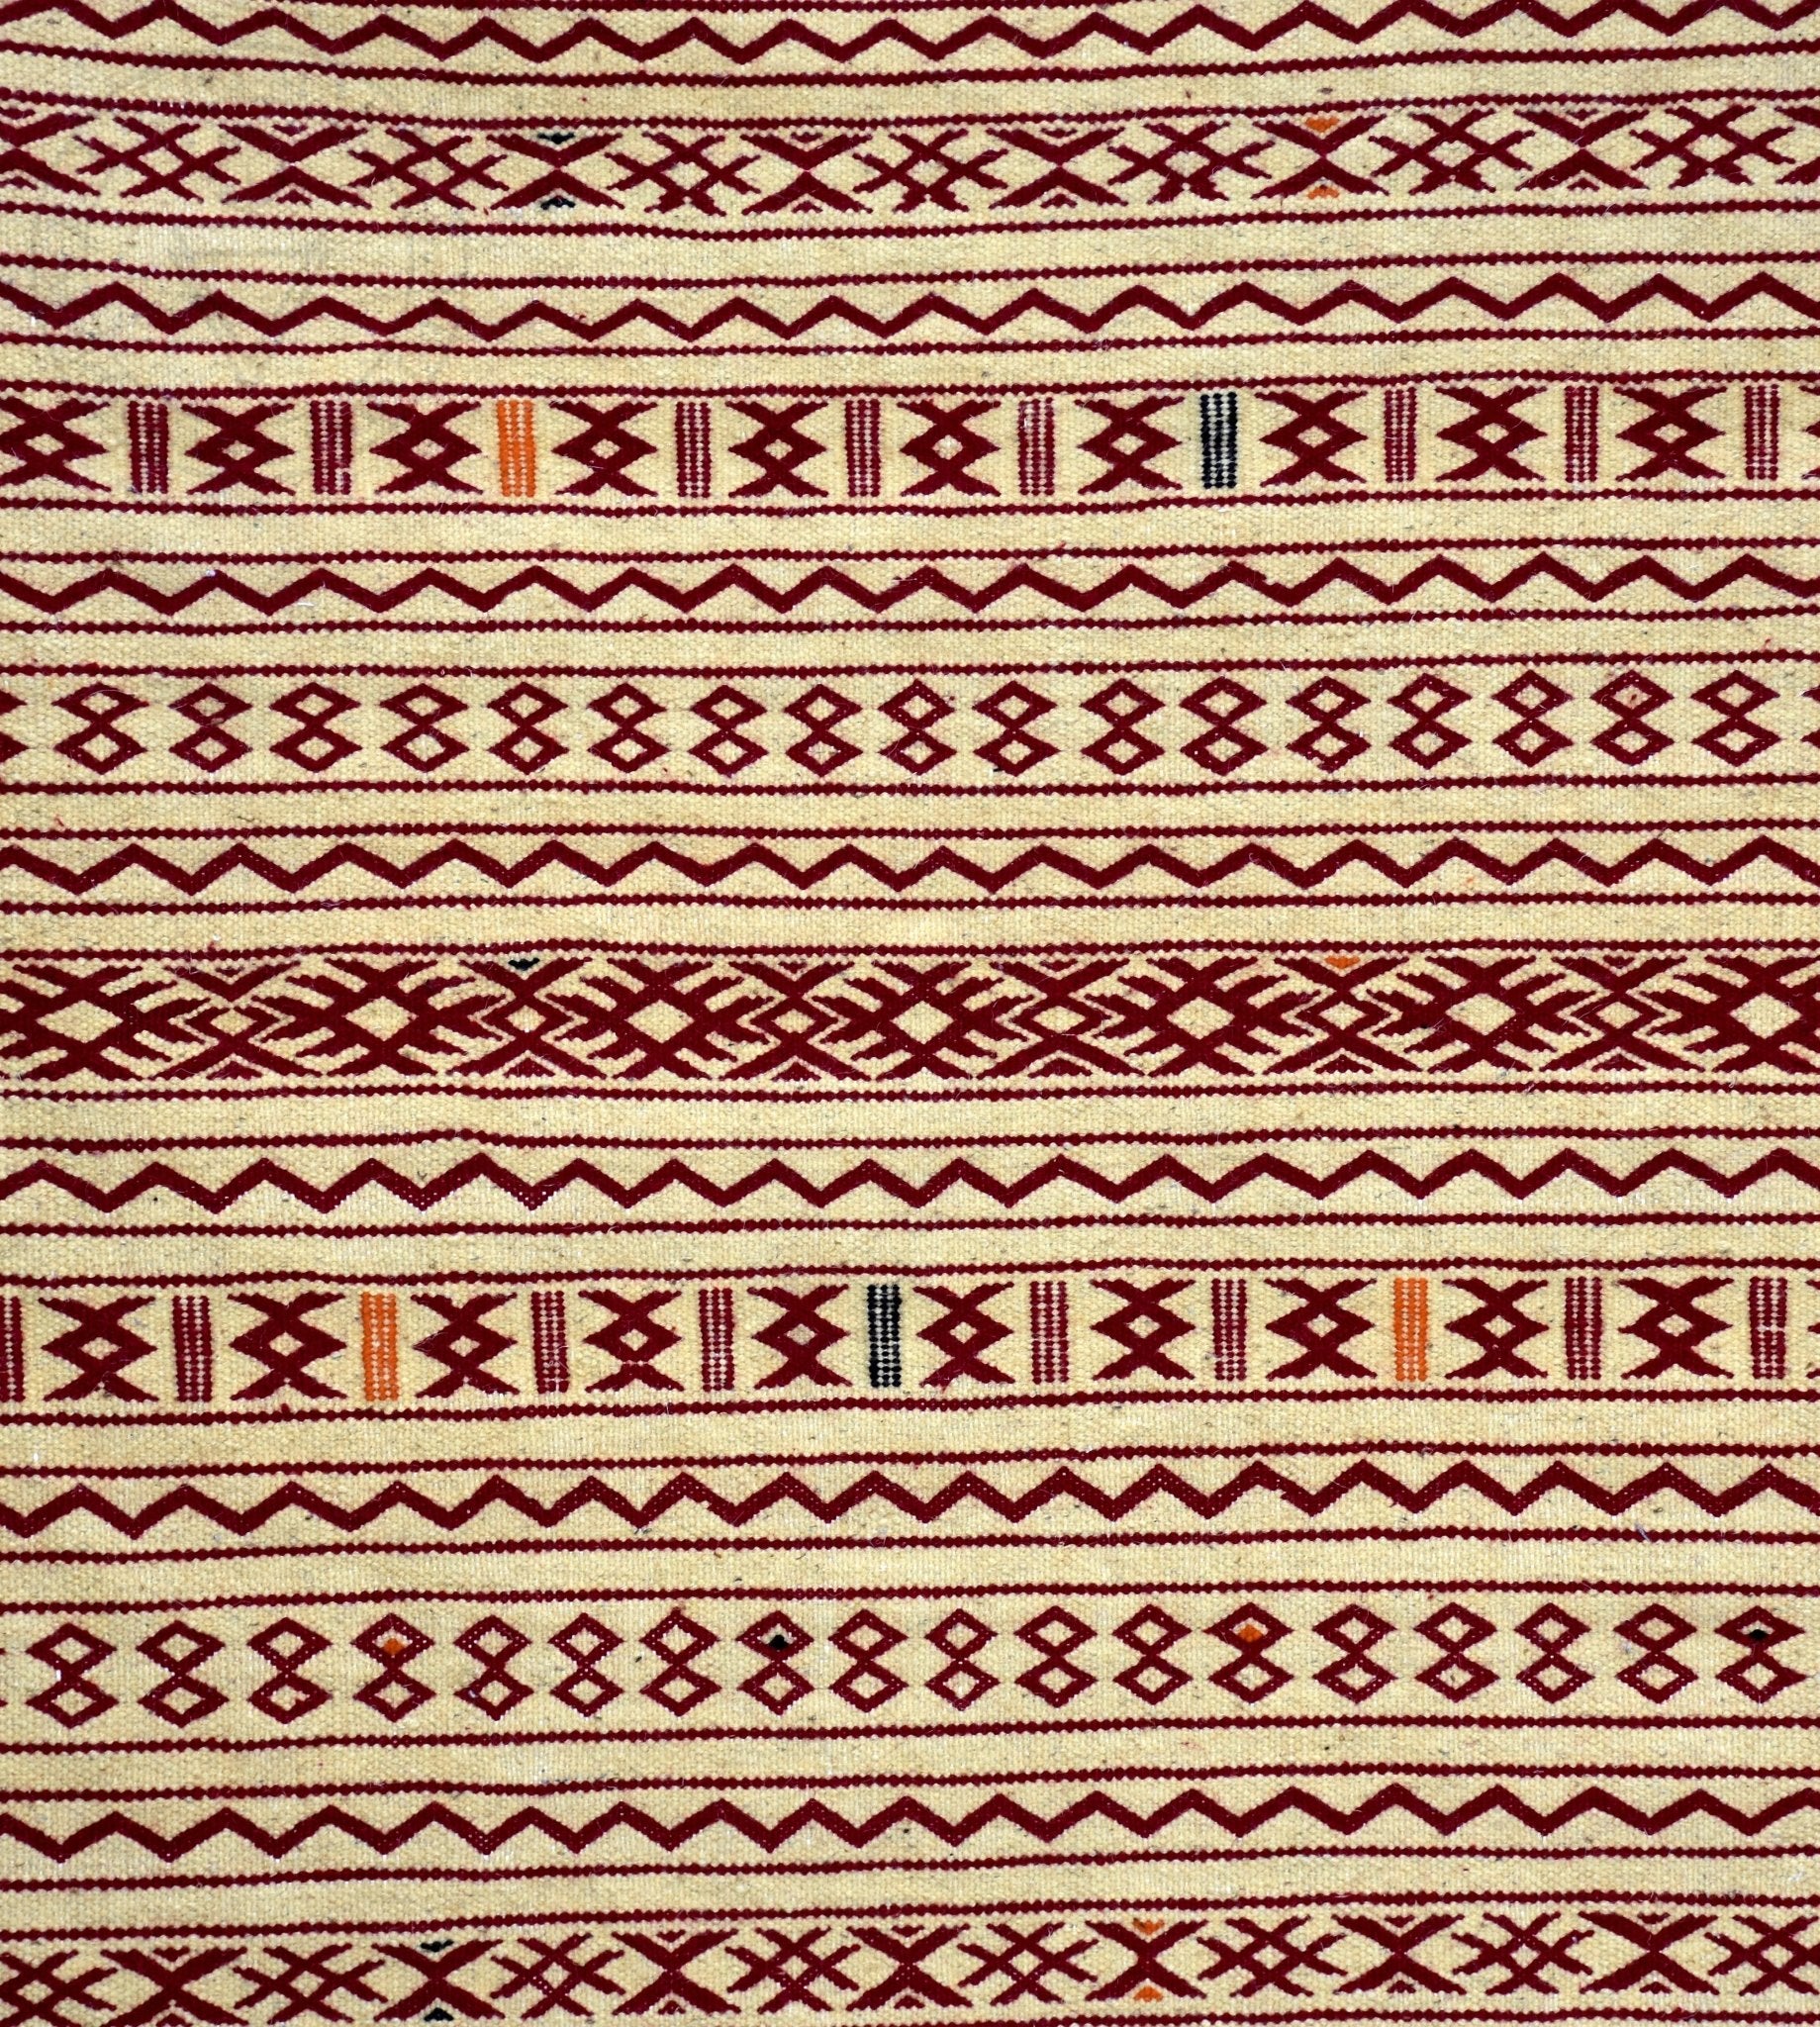 Flatweave kilim hanbal Moroccan rug - 6.37 x 11.5 ft / 194 x 350 cm - Berbers Market